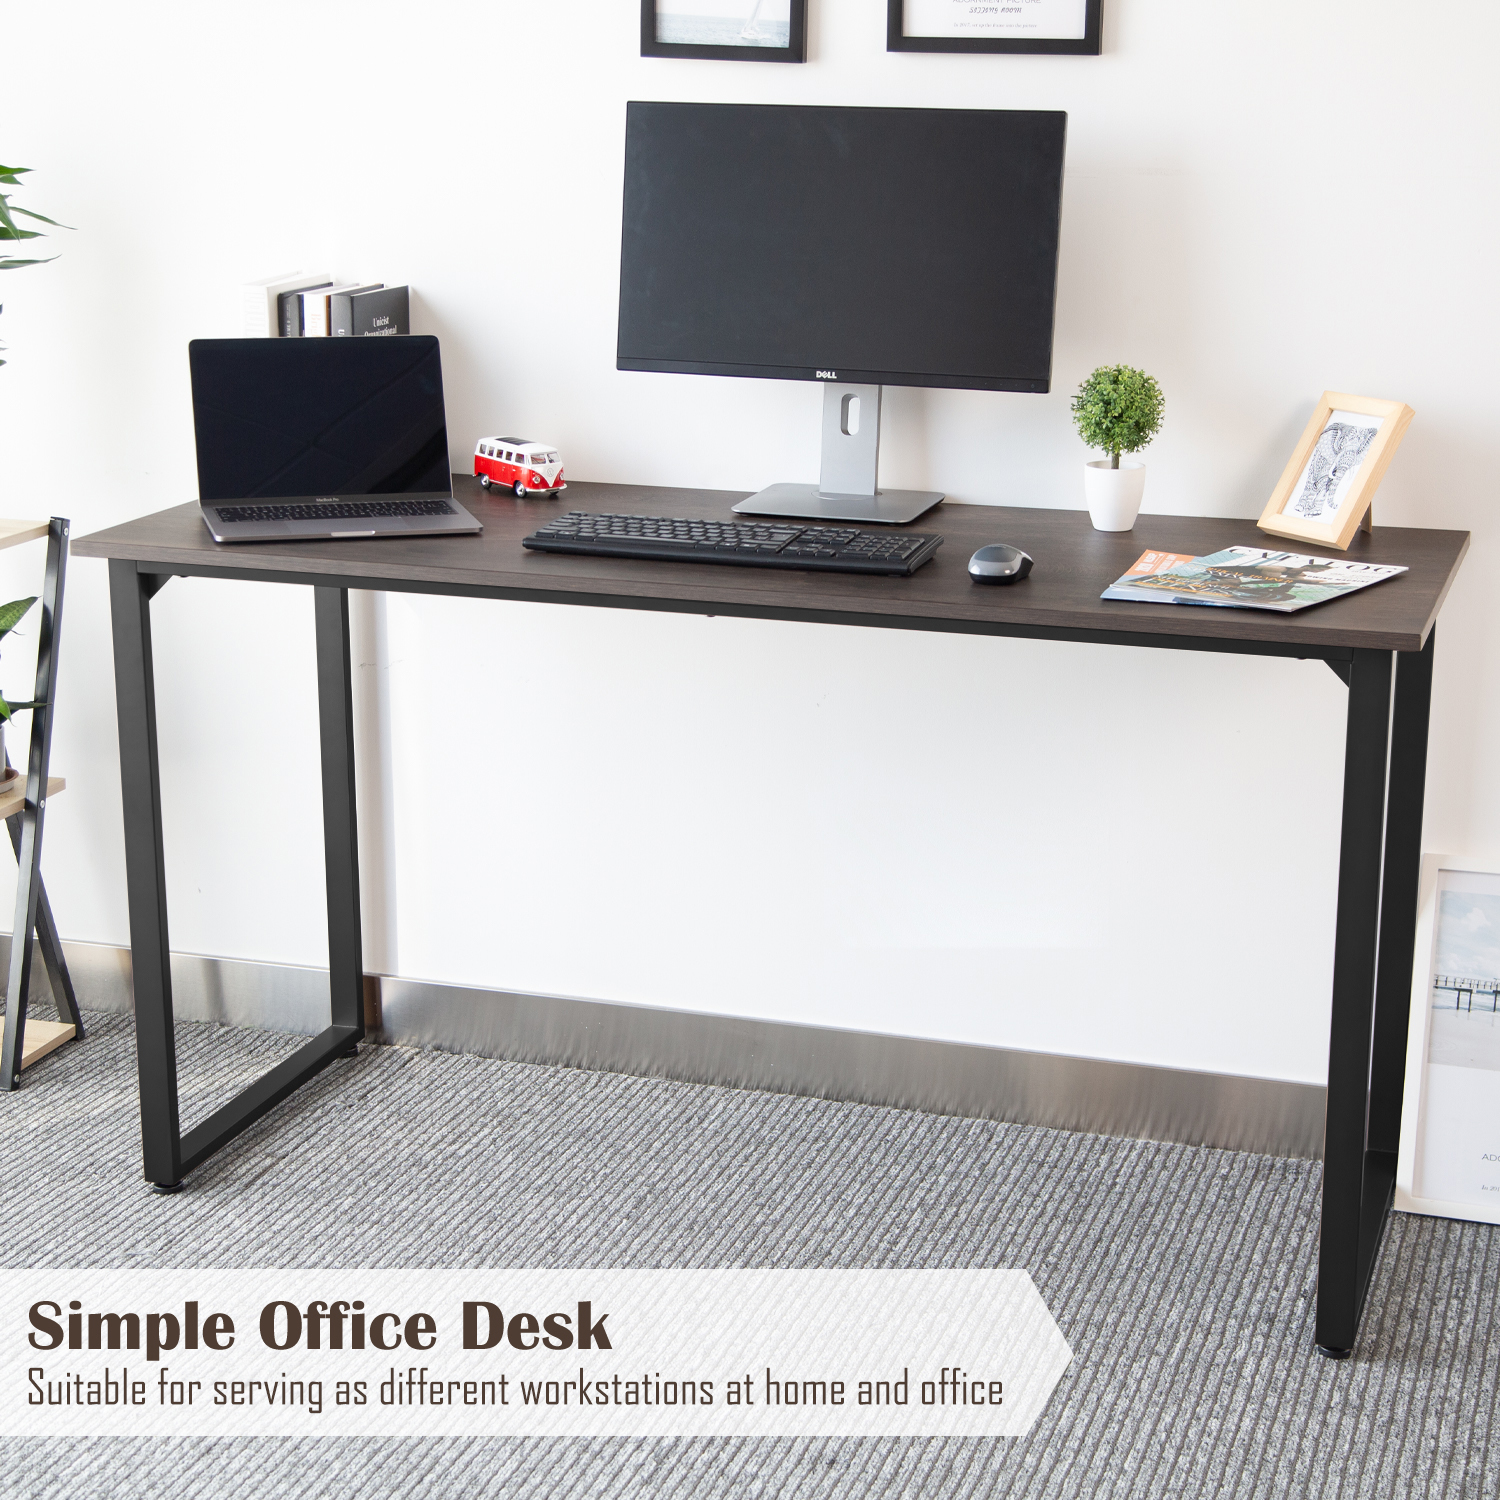 TOPSKY 59" Simple Office Desk Heavy Duty 550lbs Study Writing Desk Dinning Table DT-001L